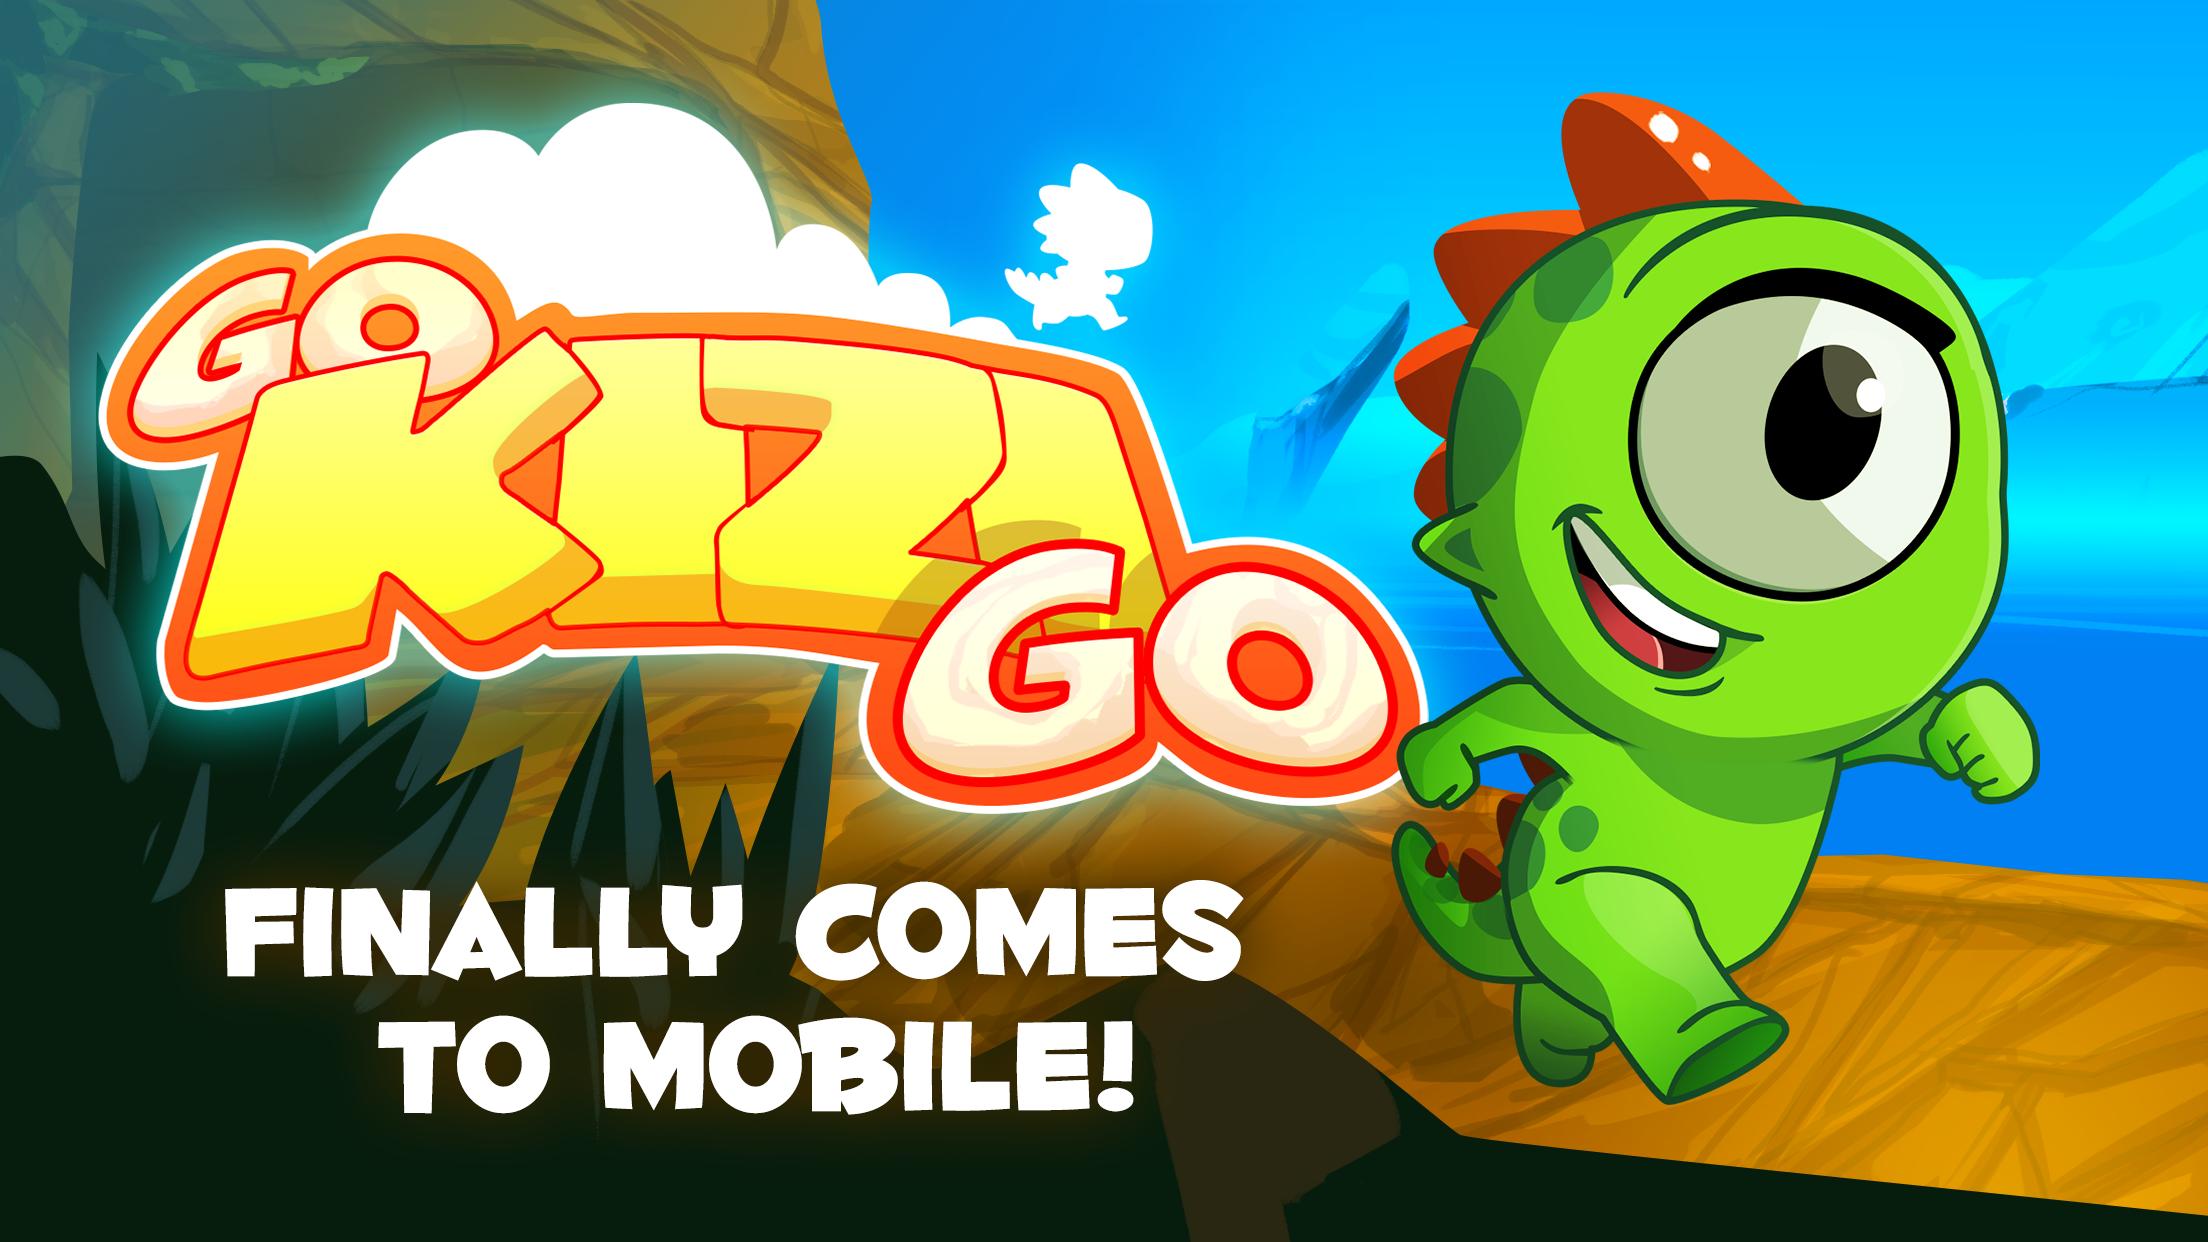 Go Kizi Go Runner By Kizi For Android Apk Download - kizi roblox online